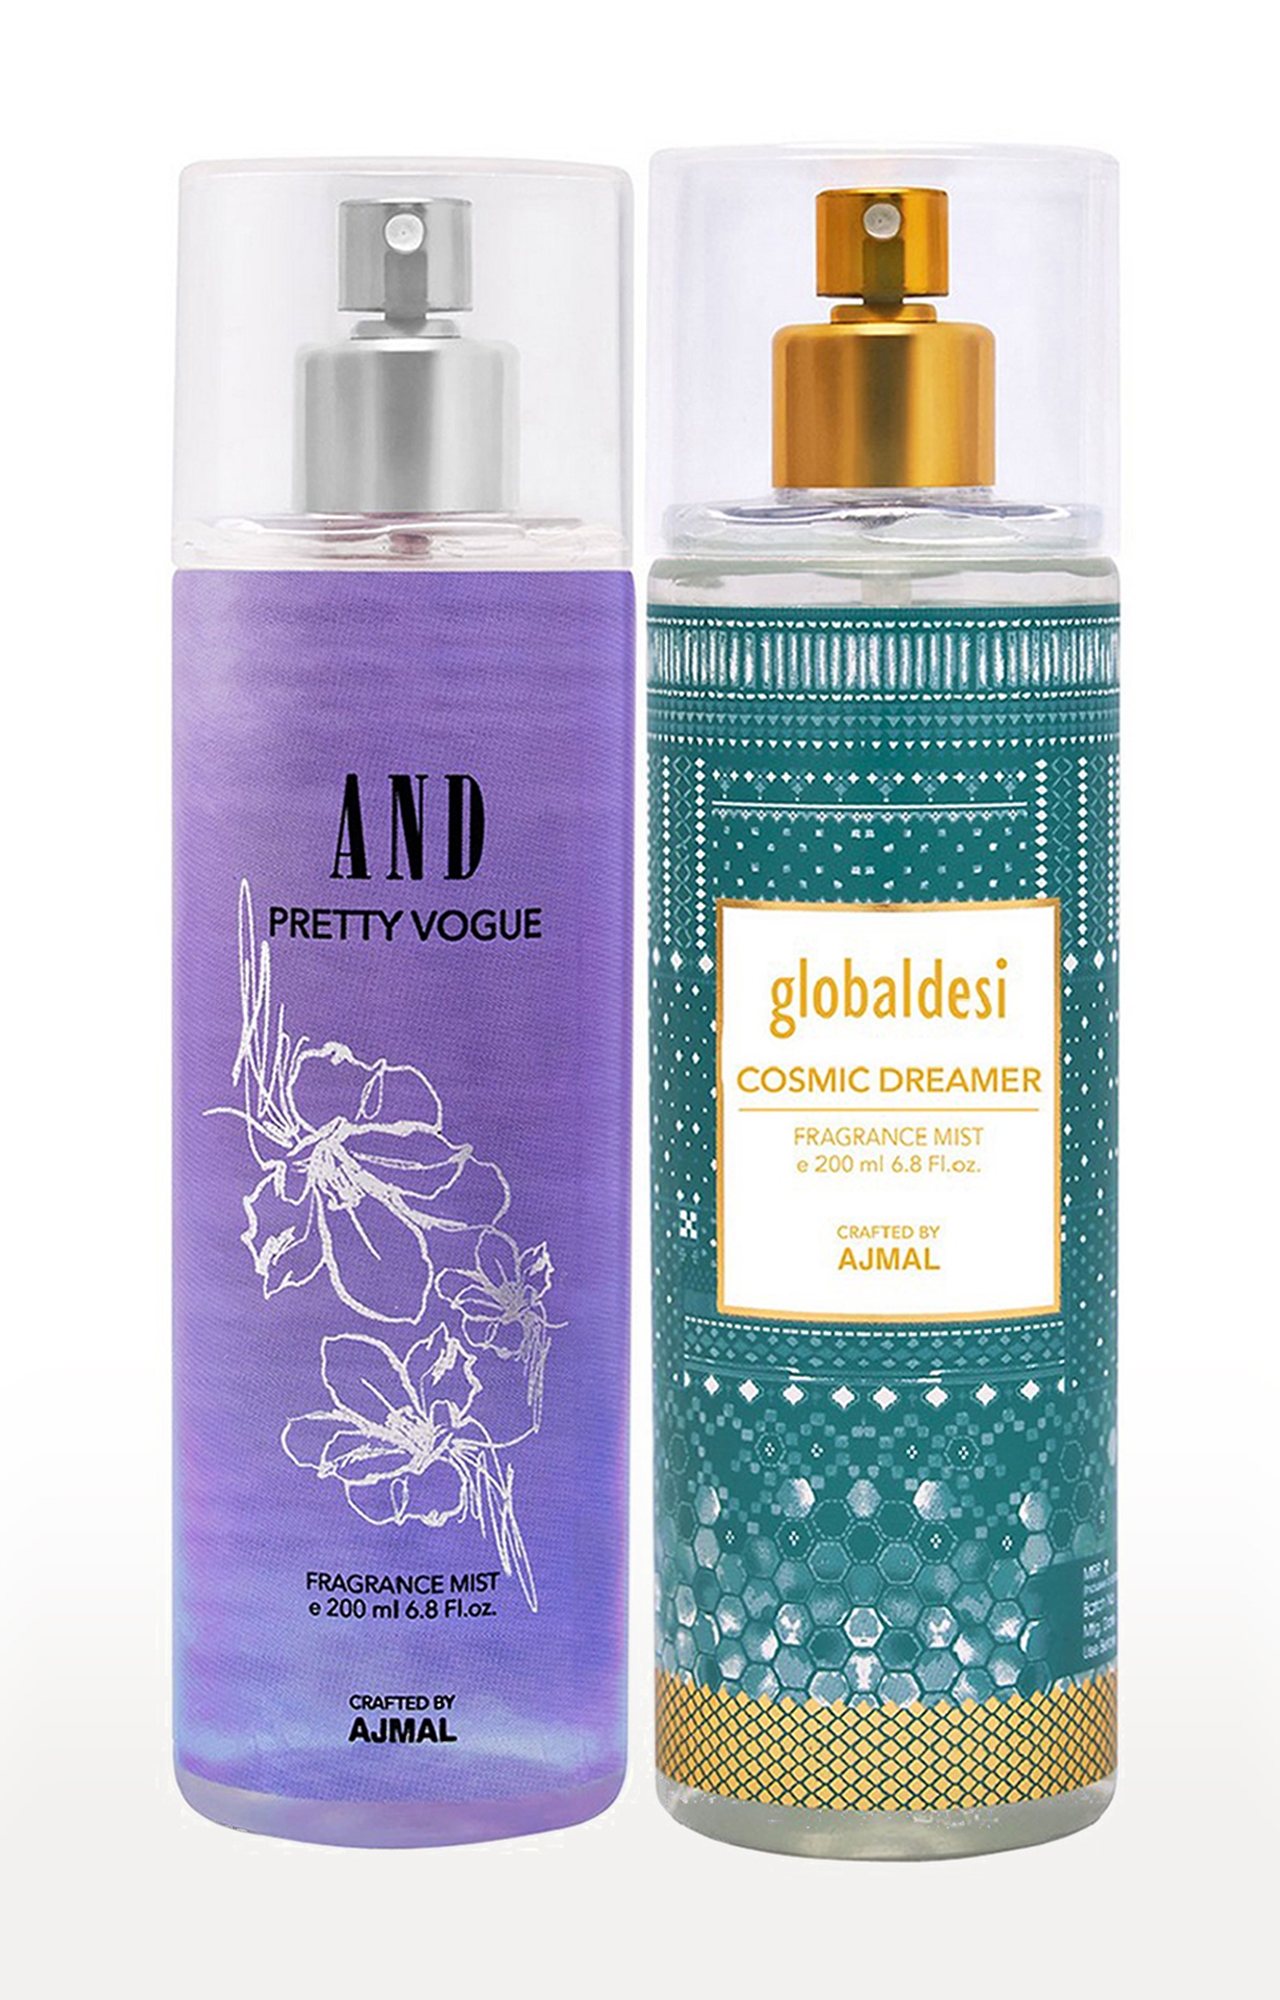 AND Pretty Vogue Body Mist 200ML & Global Desi Cosmic Dreamer Body Mist 200ML Long Lasting Scent Spray Gift For Women Perfume FREE